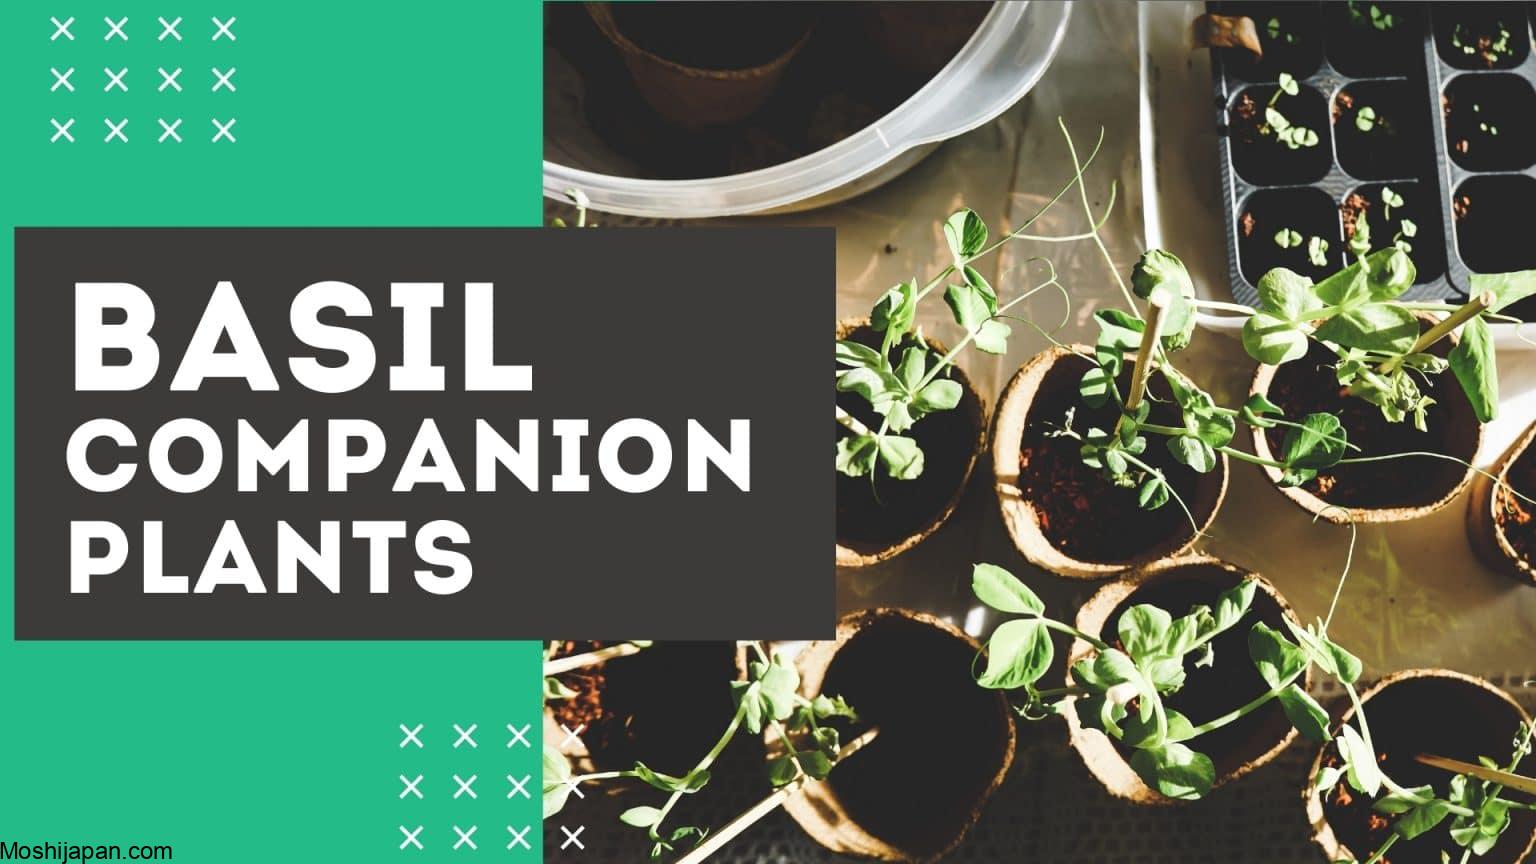 Basil companion plants: The best garden partners for basil plants 2